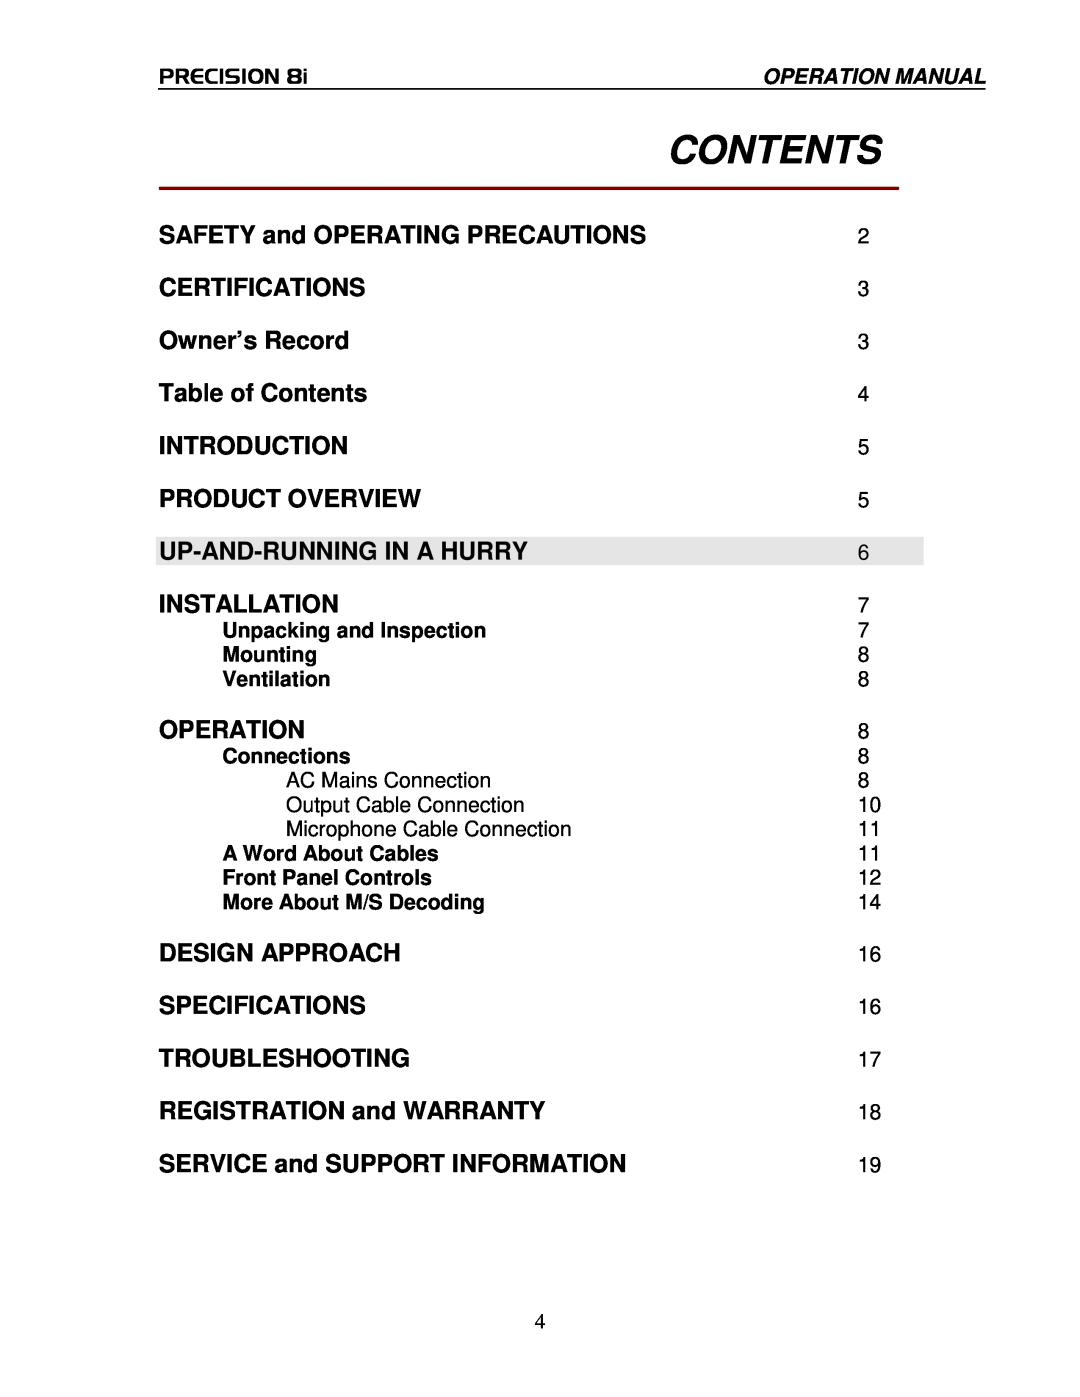 True Manufacturing Company PRECISION 8i operation manual Contents 